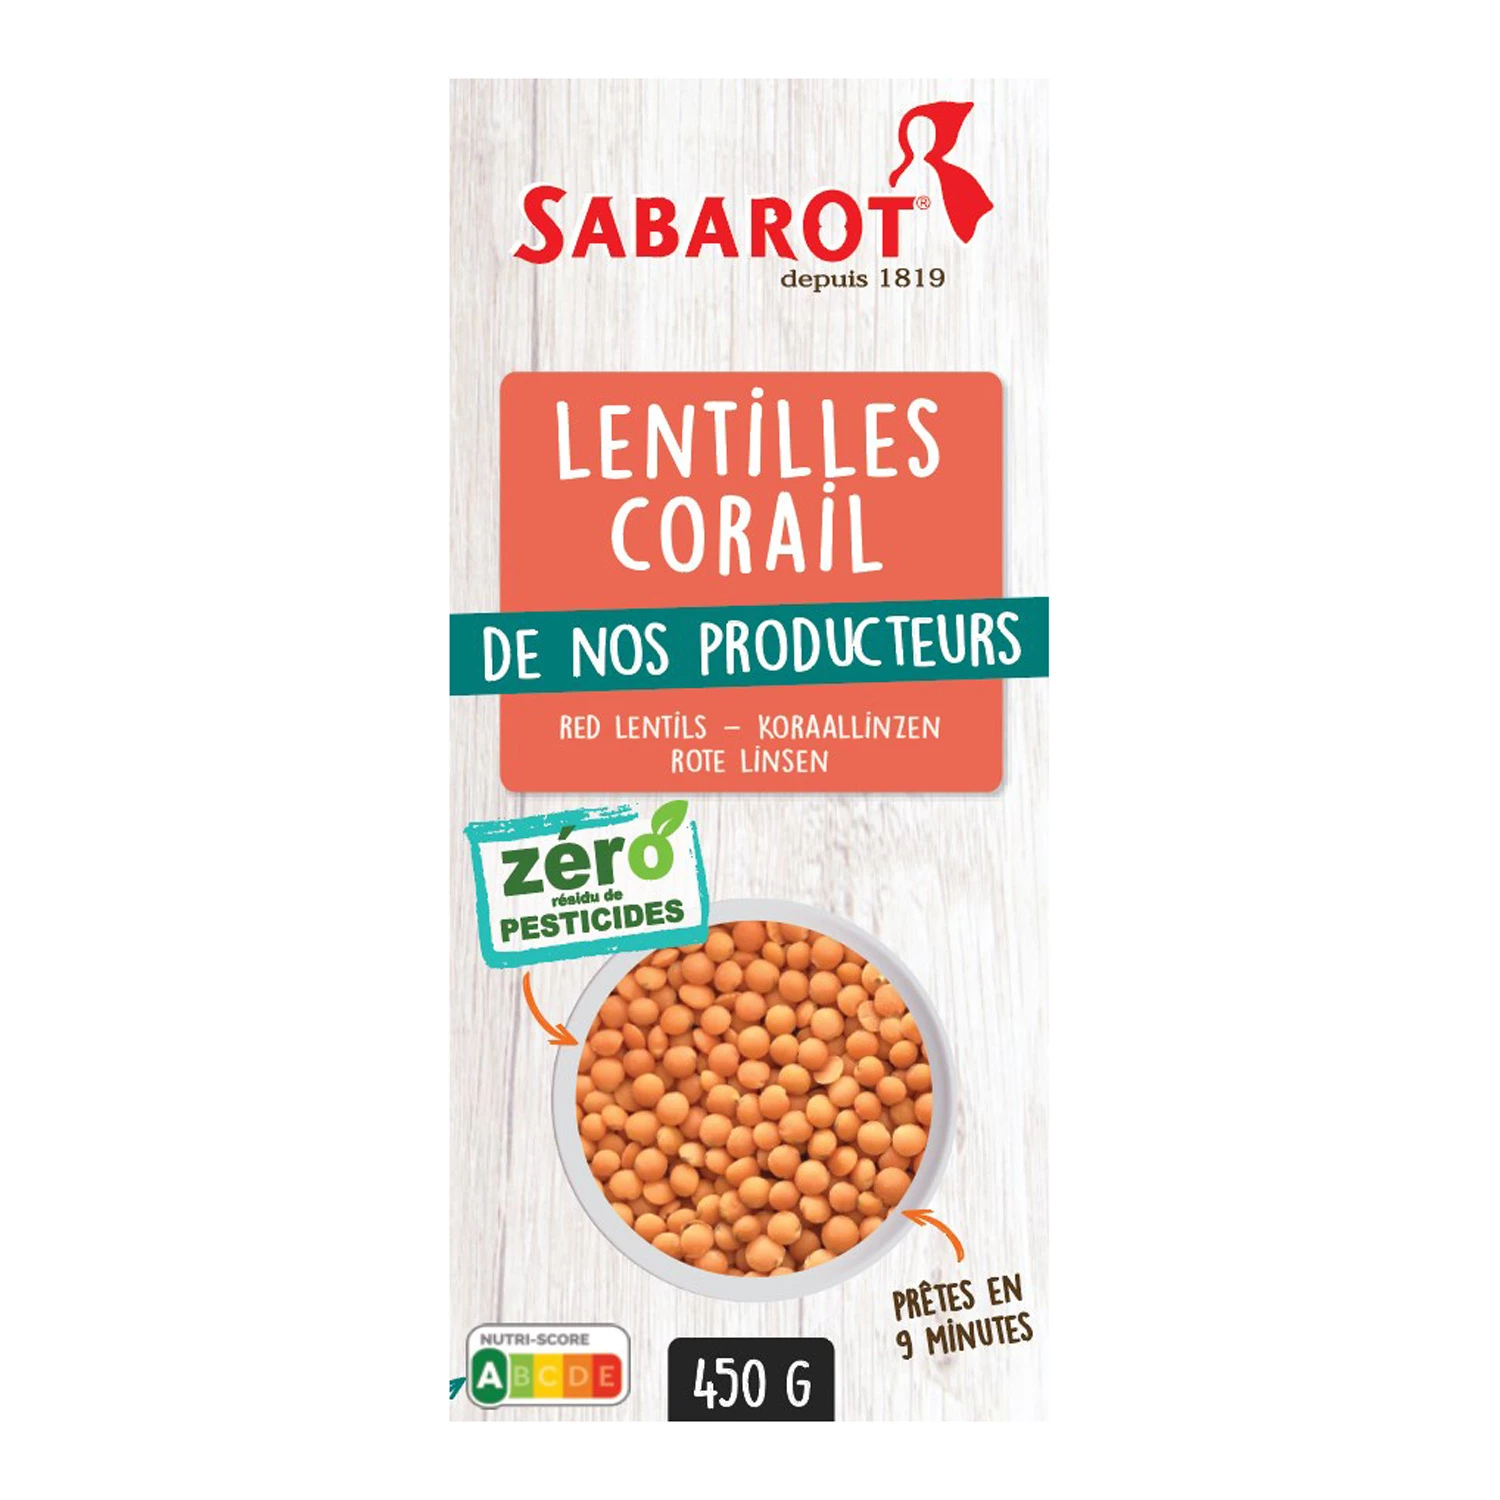 Lentilles corail; 450g - SABAROT